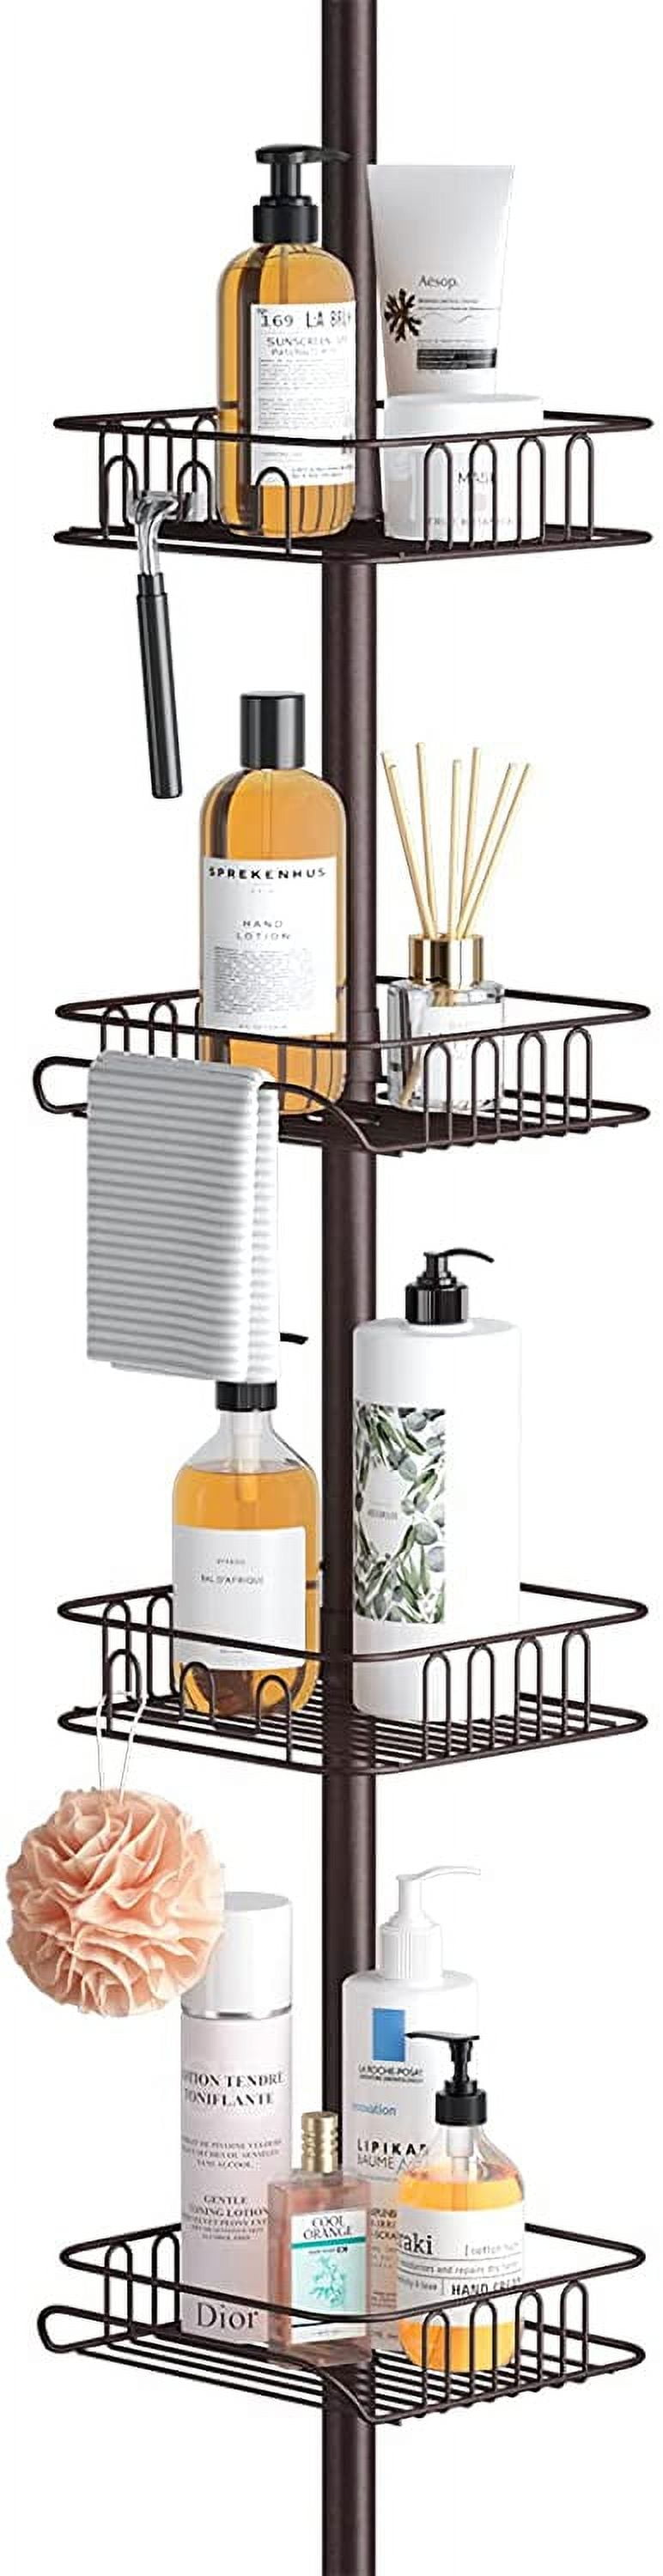 SEIRIONE Rustproof Shower Corner Caddy Organizer for Bathroom, Freestanding Tension Pole with 4 Baskets, for Bathtub Shampoo Storage, 56 to 114 inch